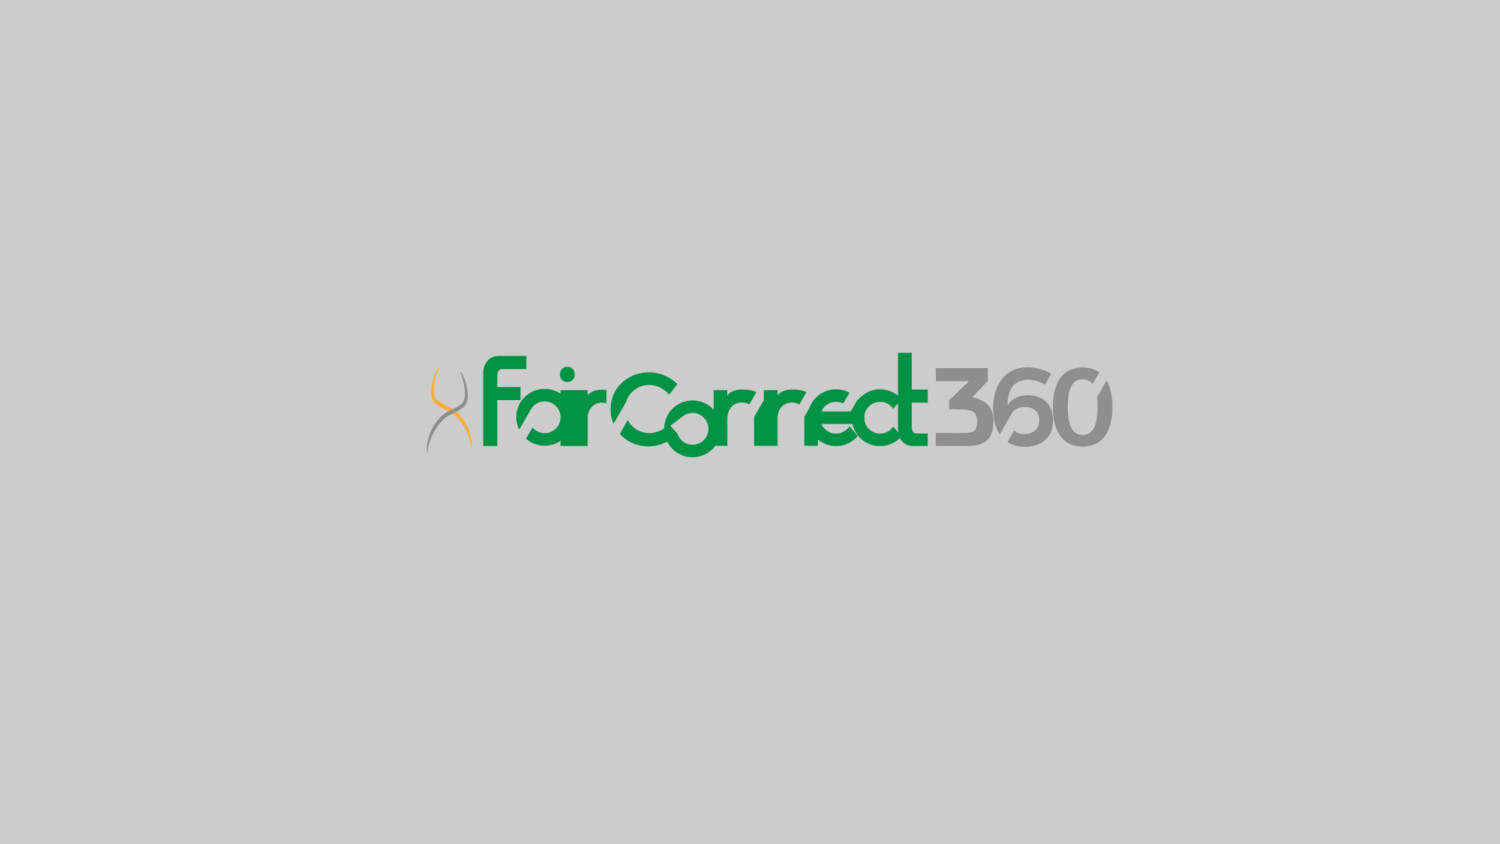 FairConnect360